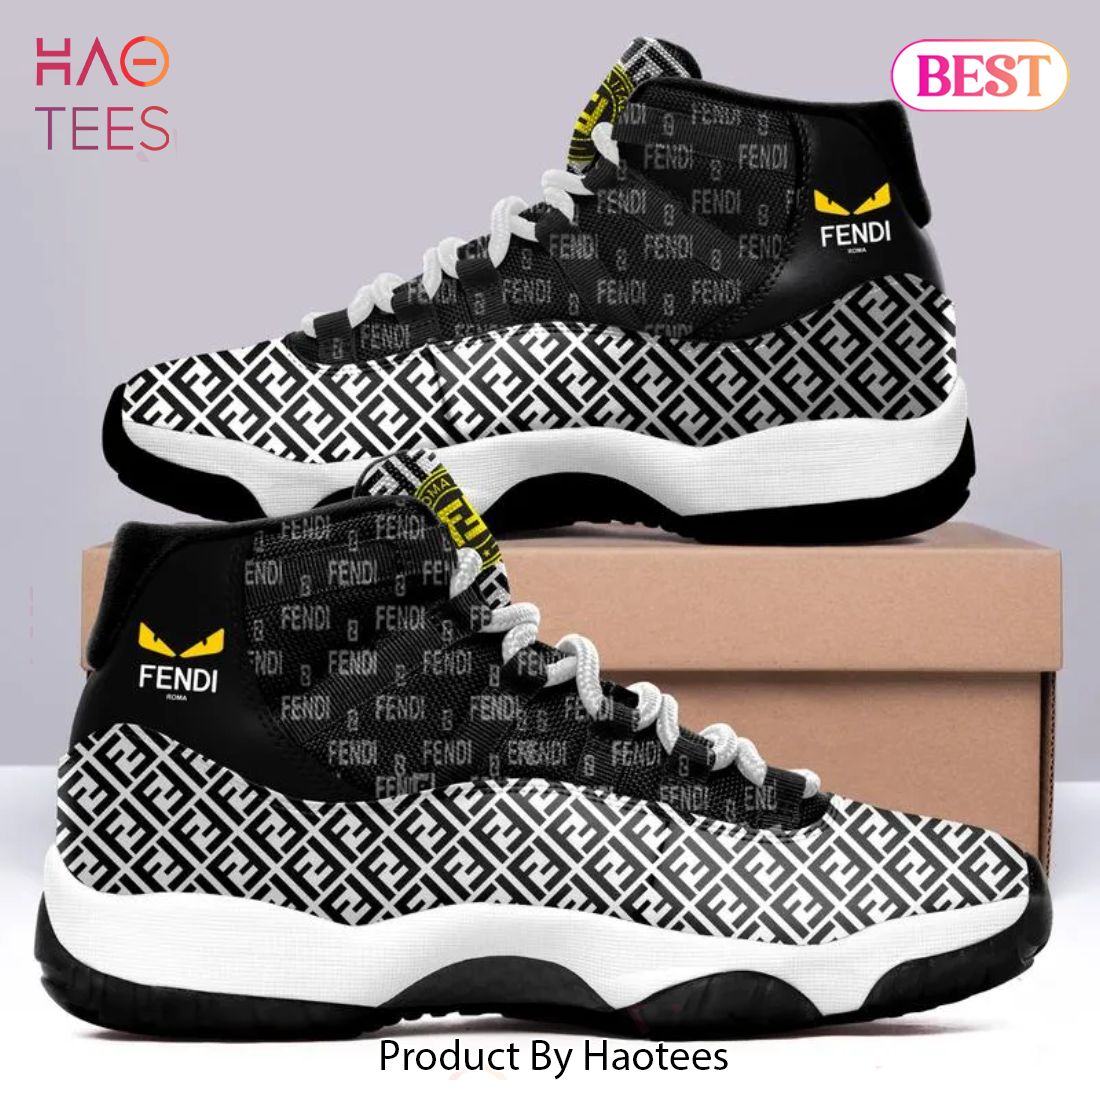 [NEW FASHION] Fendi Eyes Black White Air Jordan 11 Sneakers Shoes Hot 2023 Gifts For Men Women